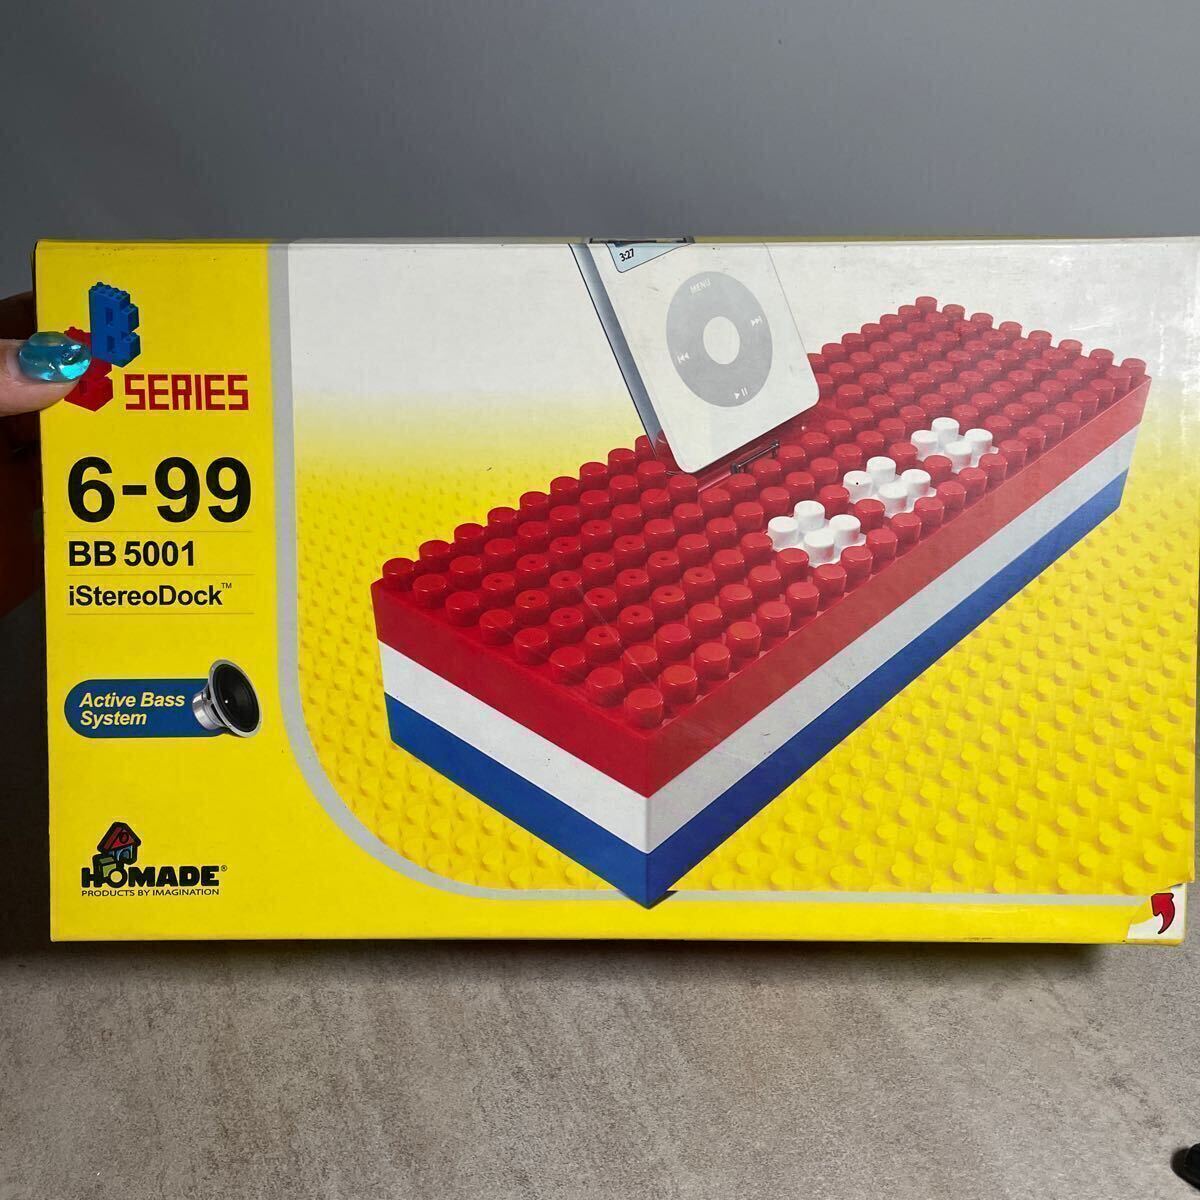 hz98 新品 未使用品 LEGO レゴ レゴブロックipod スピーカー 6-99 BB 5001 大型ブロックスピーカー 便利 オシャレ 黄色 ポータブル の画像2